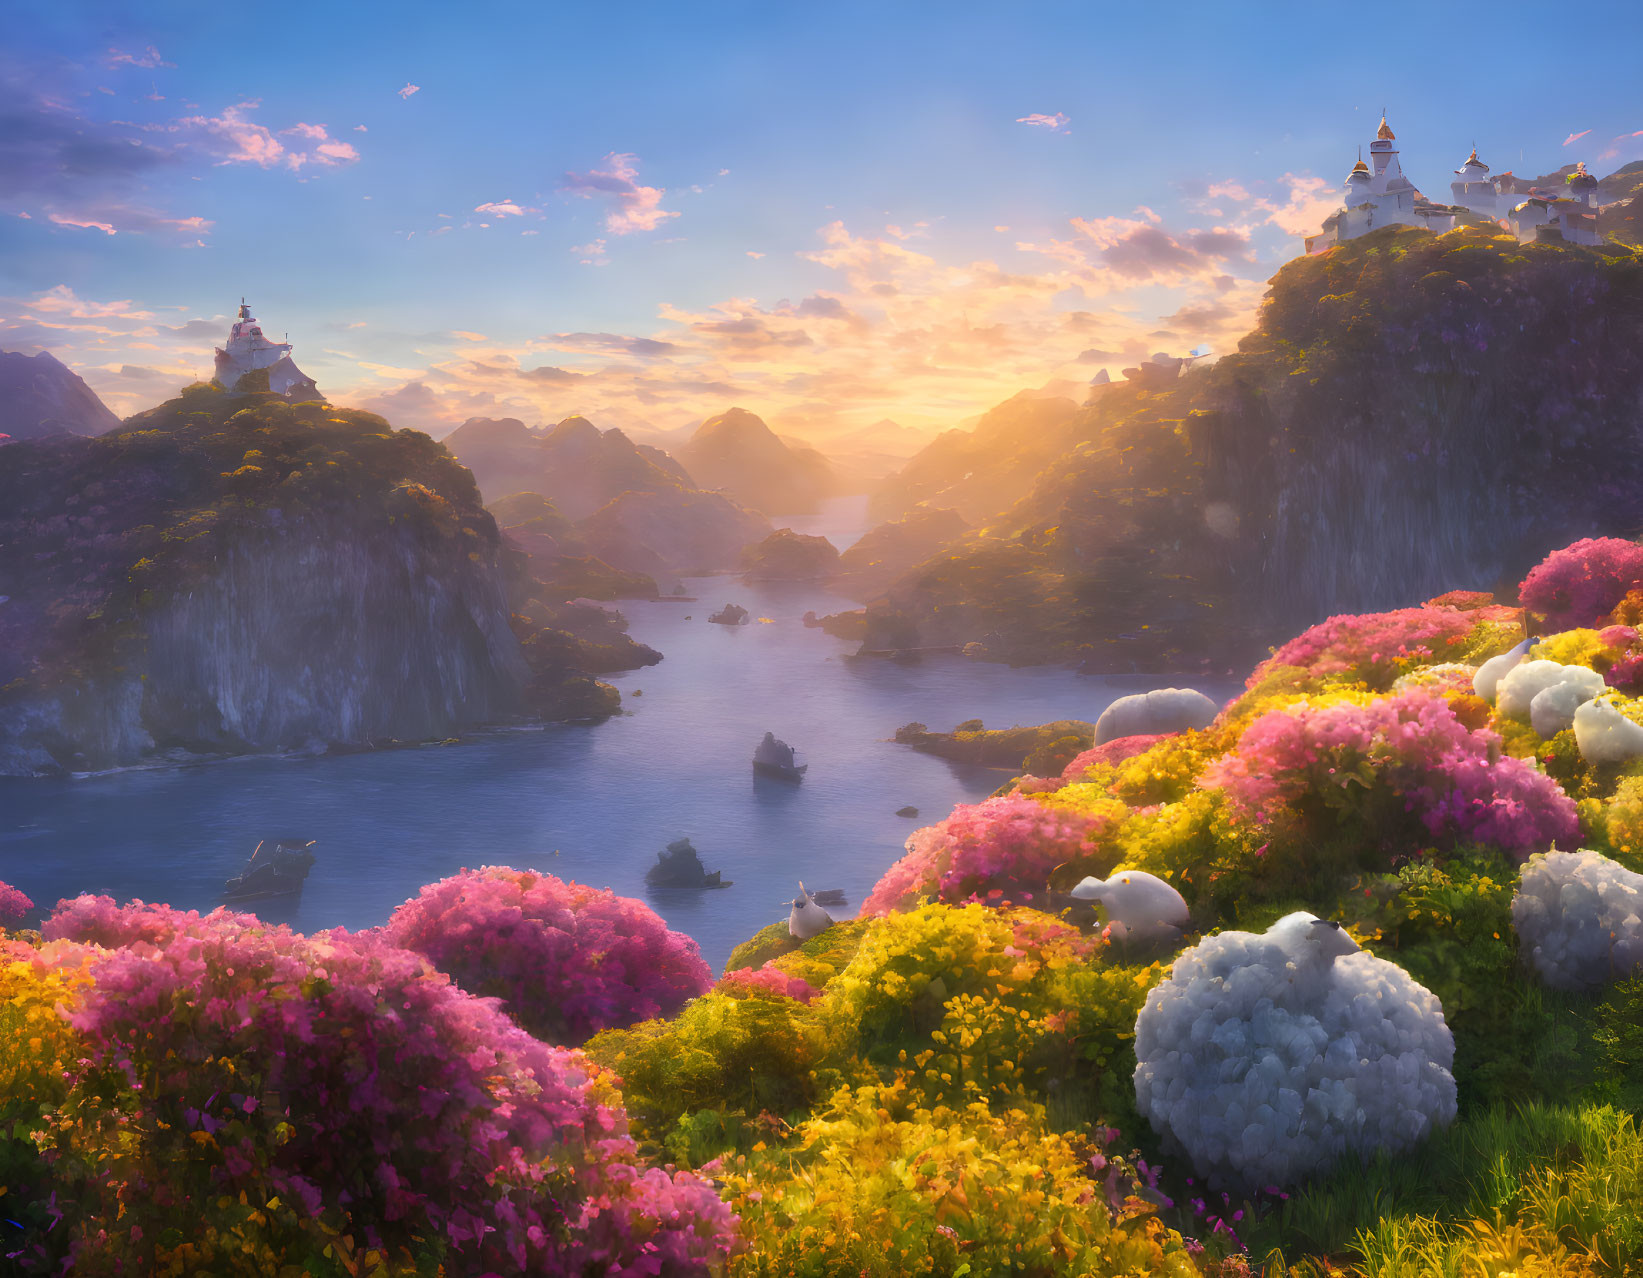 Serene fantasy landscape: sunrise, pink flowers, greenery, rocky peaks, calm waters, distant